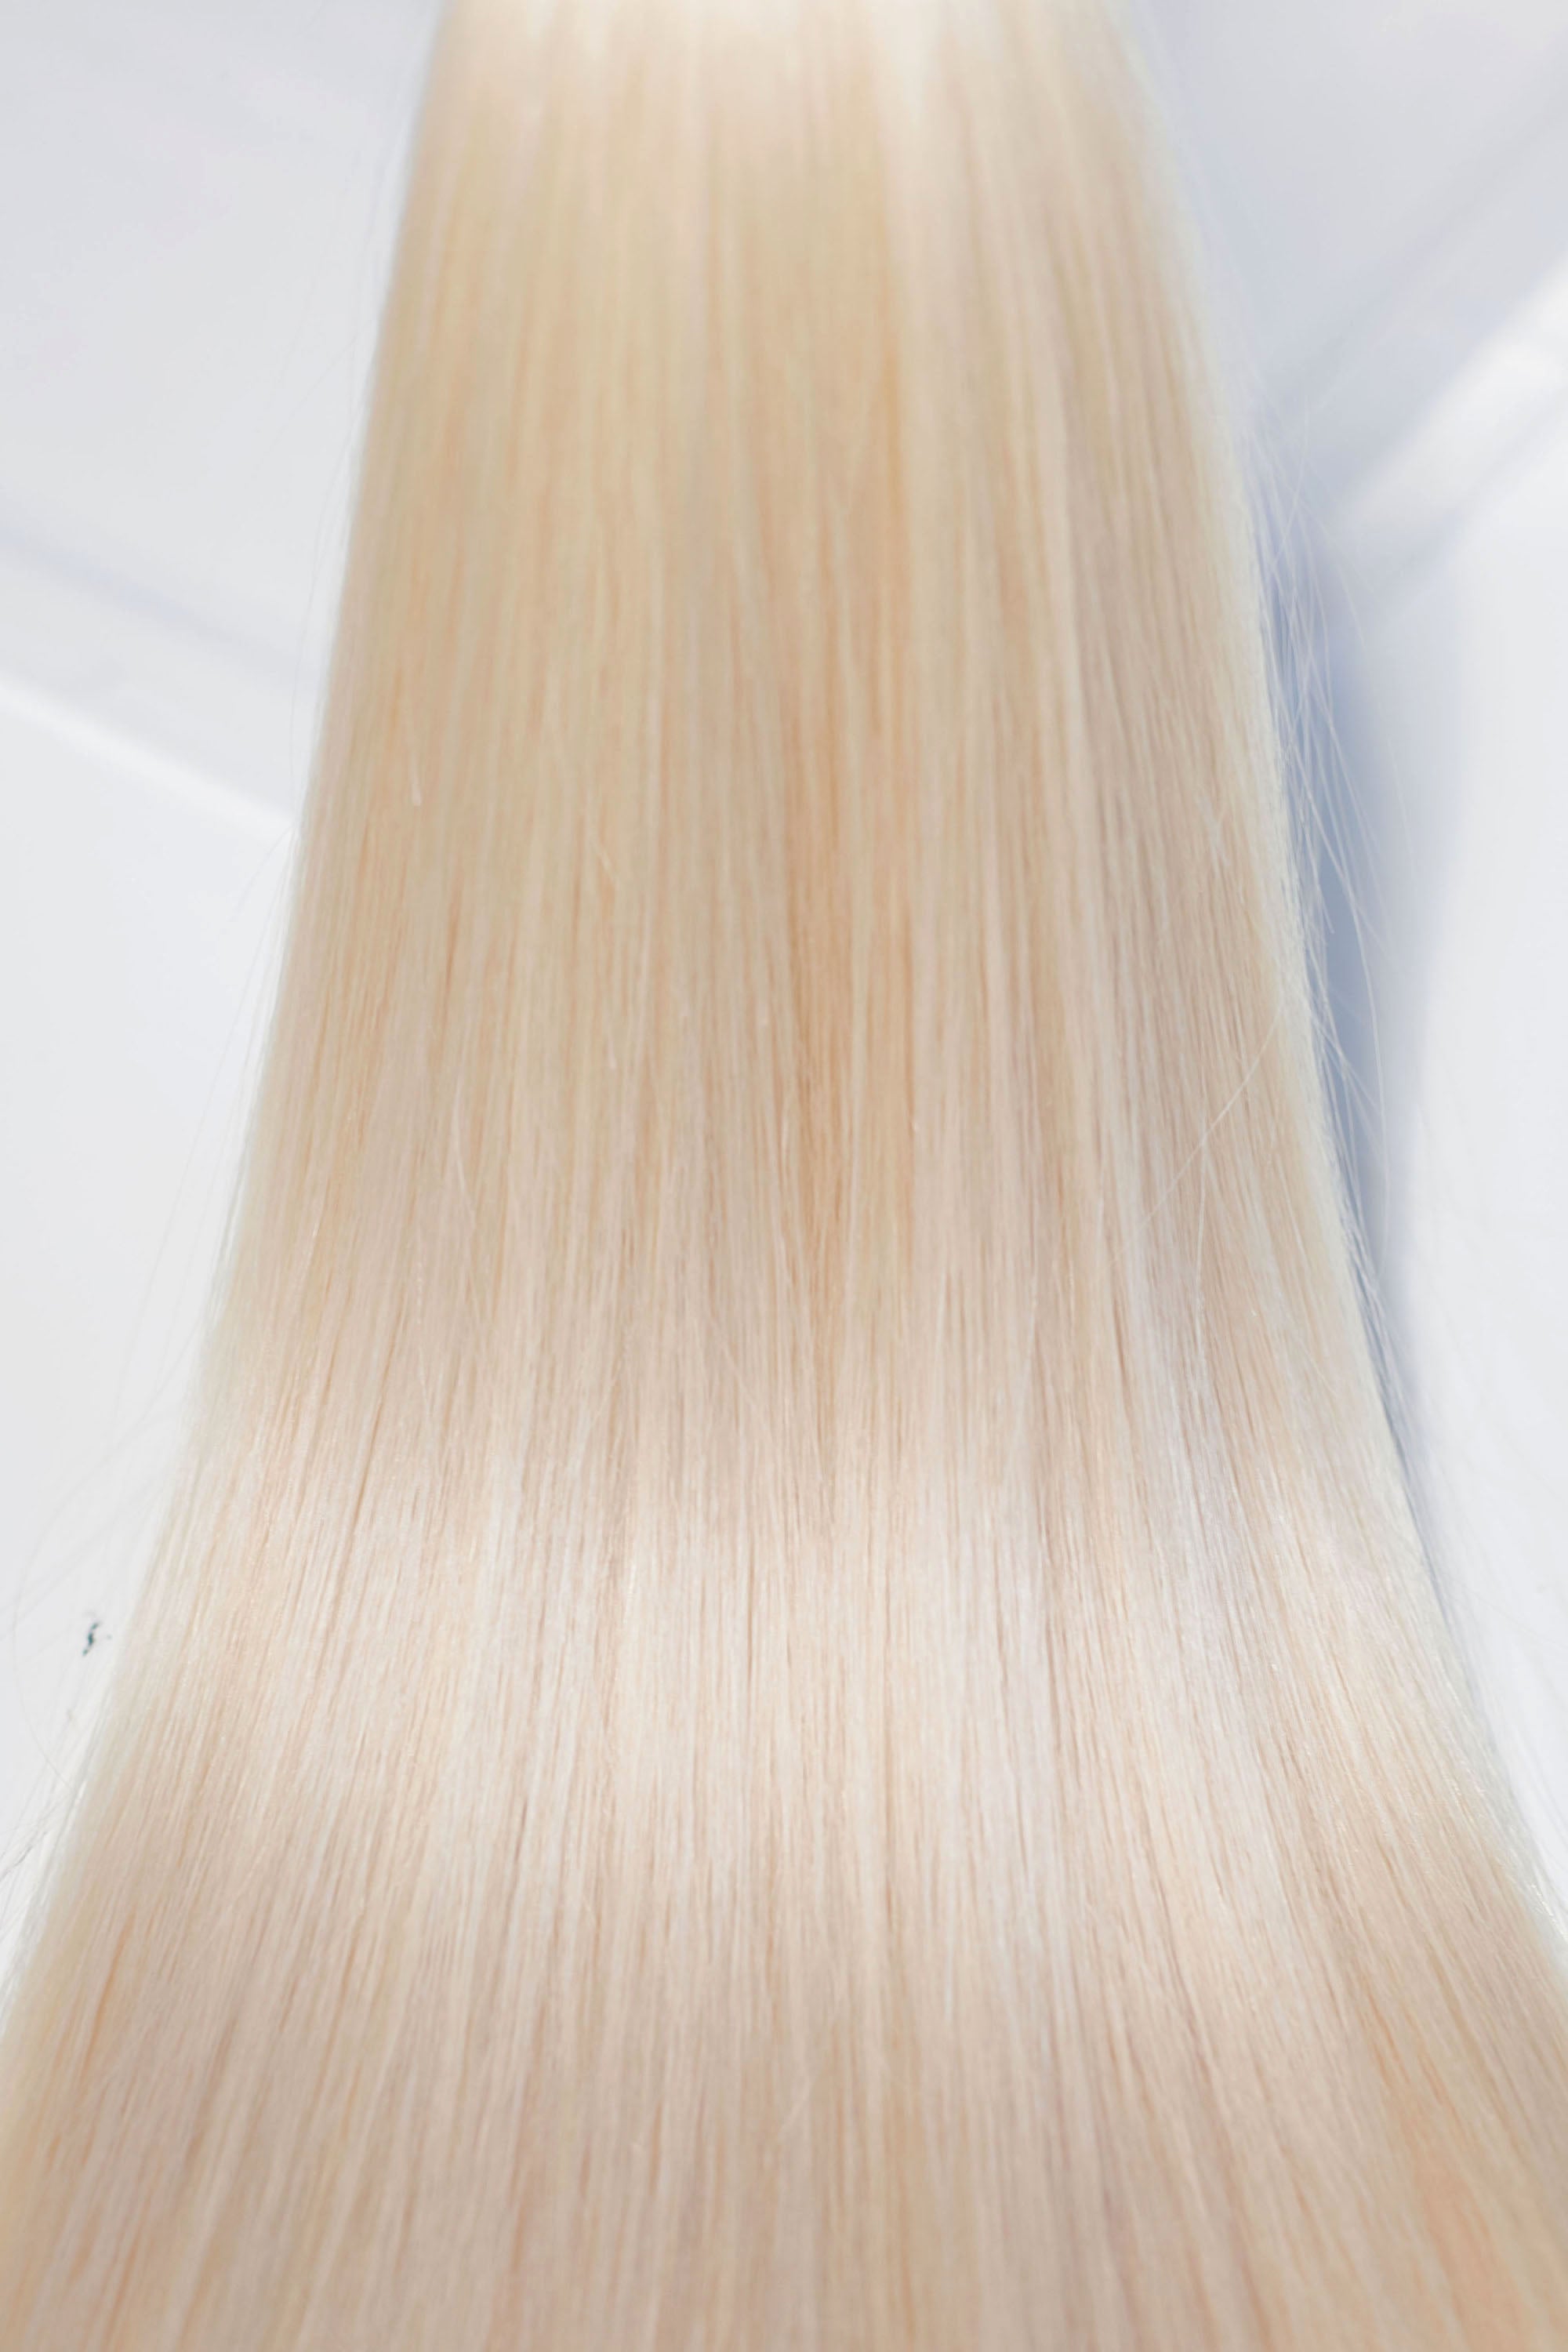 Behair professional Keratin Tip "Premium" 28" (70cm) Natural Straight Ice Blond #000 - 25g (Micro - 0.5g each pcs) hair extensions